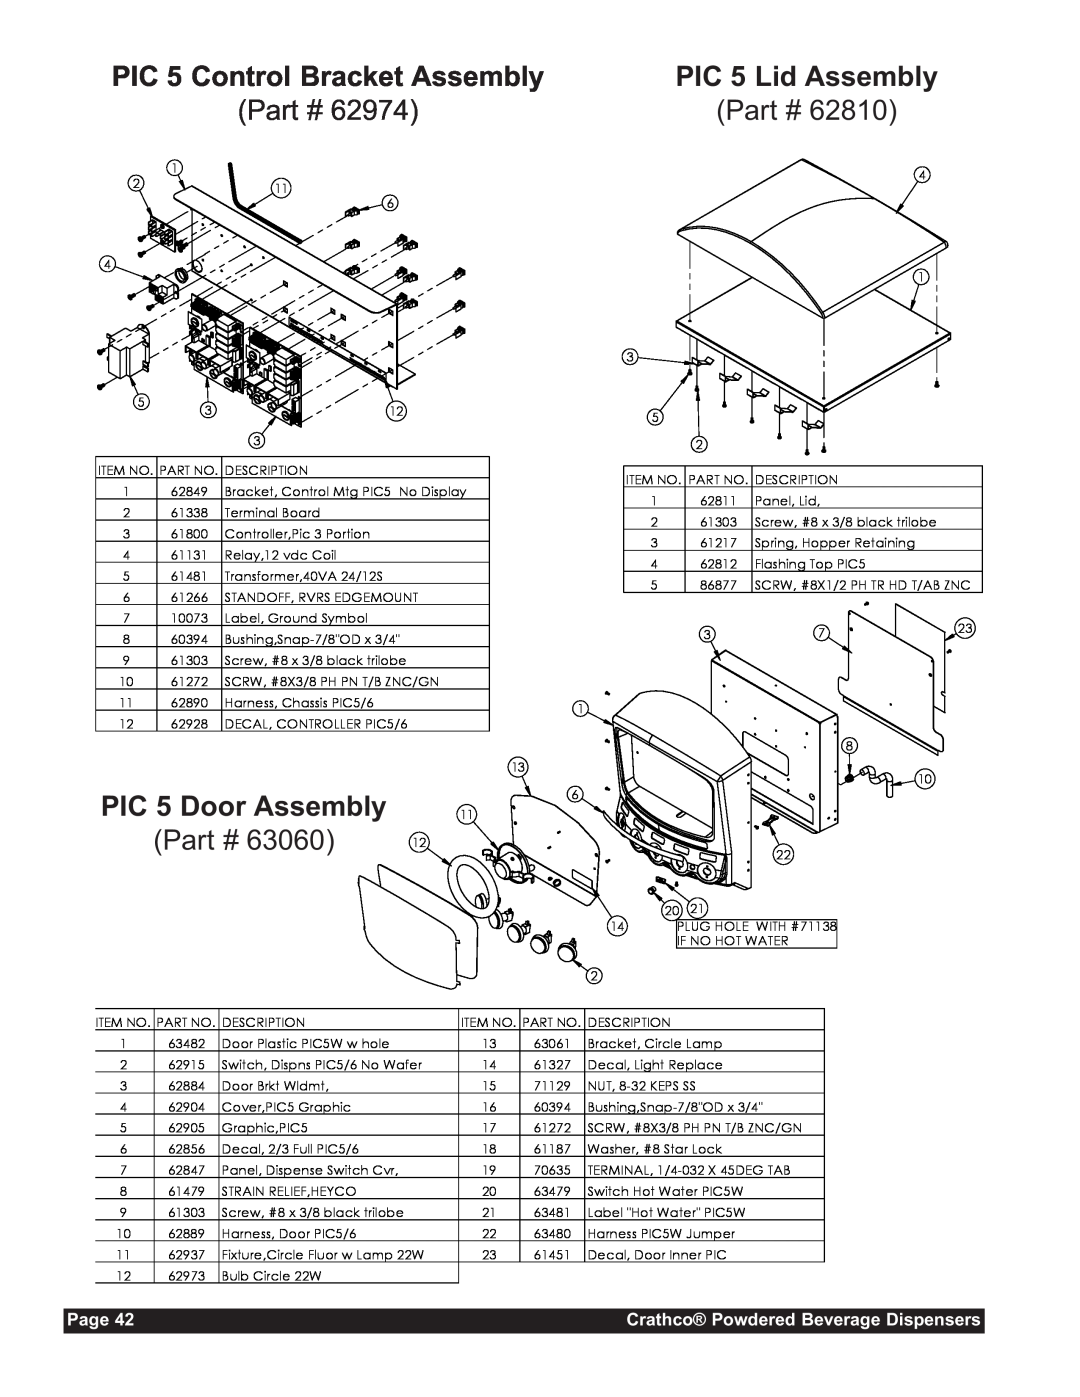 Grindmaster CC-302-20 PIC 5 Control Bracket Assembly, PIC 5 Lid Assembly, 62974, 62810, PIC 5 Door Assembly, 63060, Page 